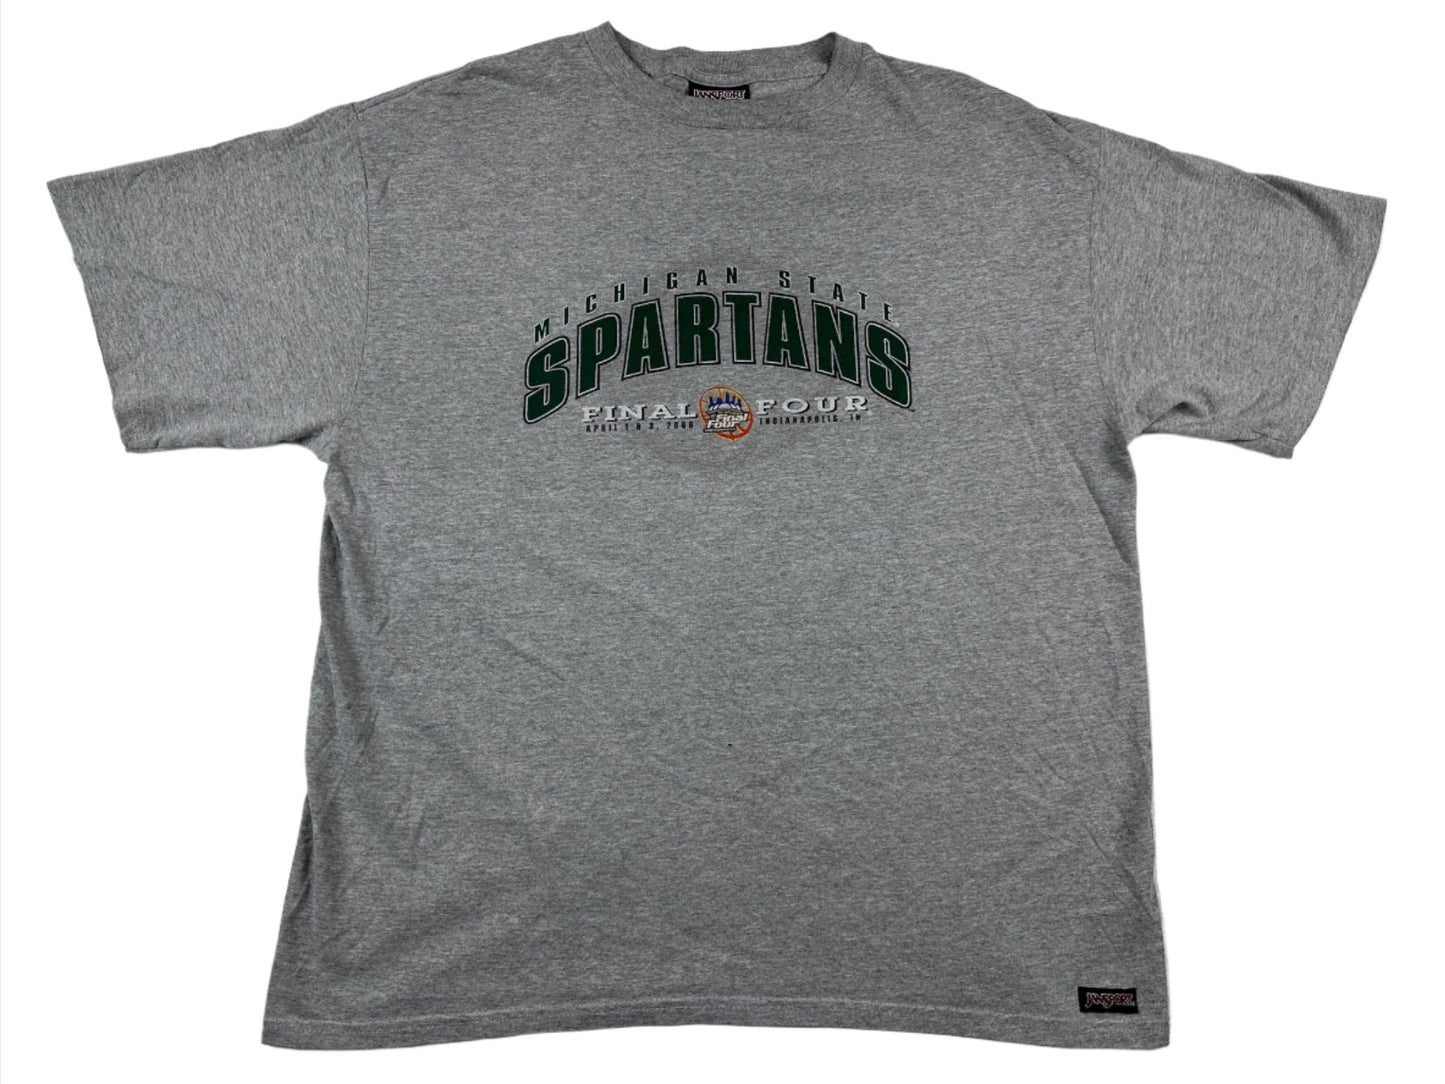 Michigan State 2000 National Champions T-Shirt